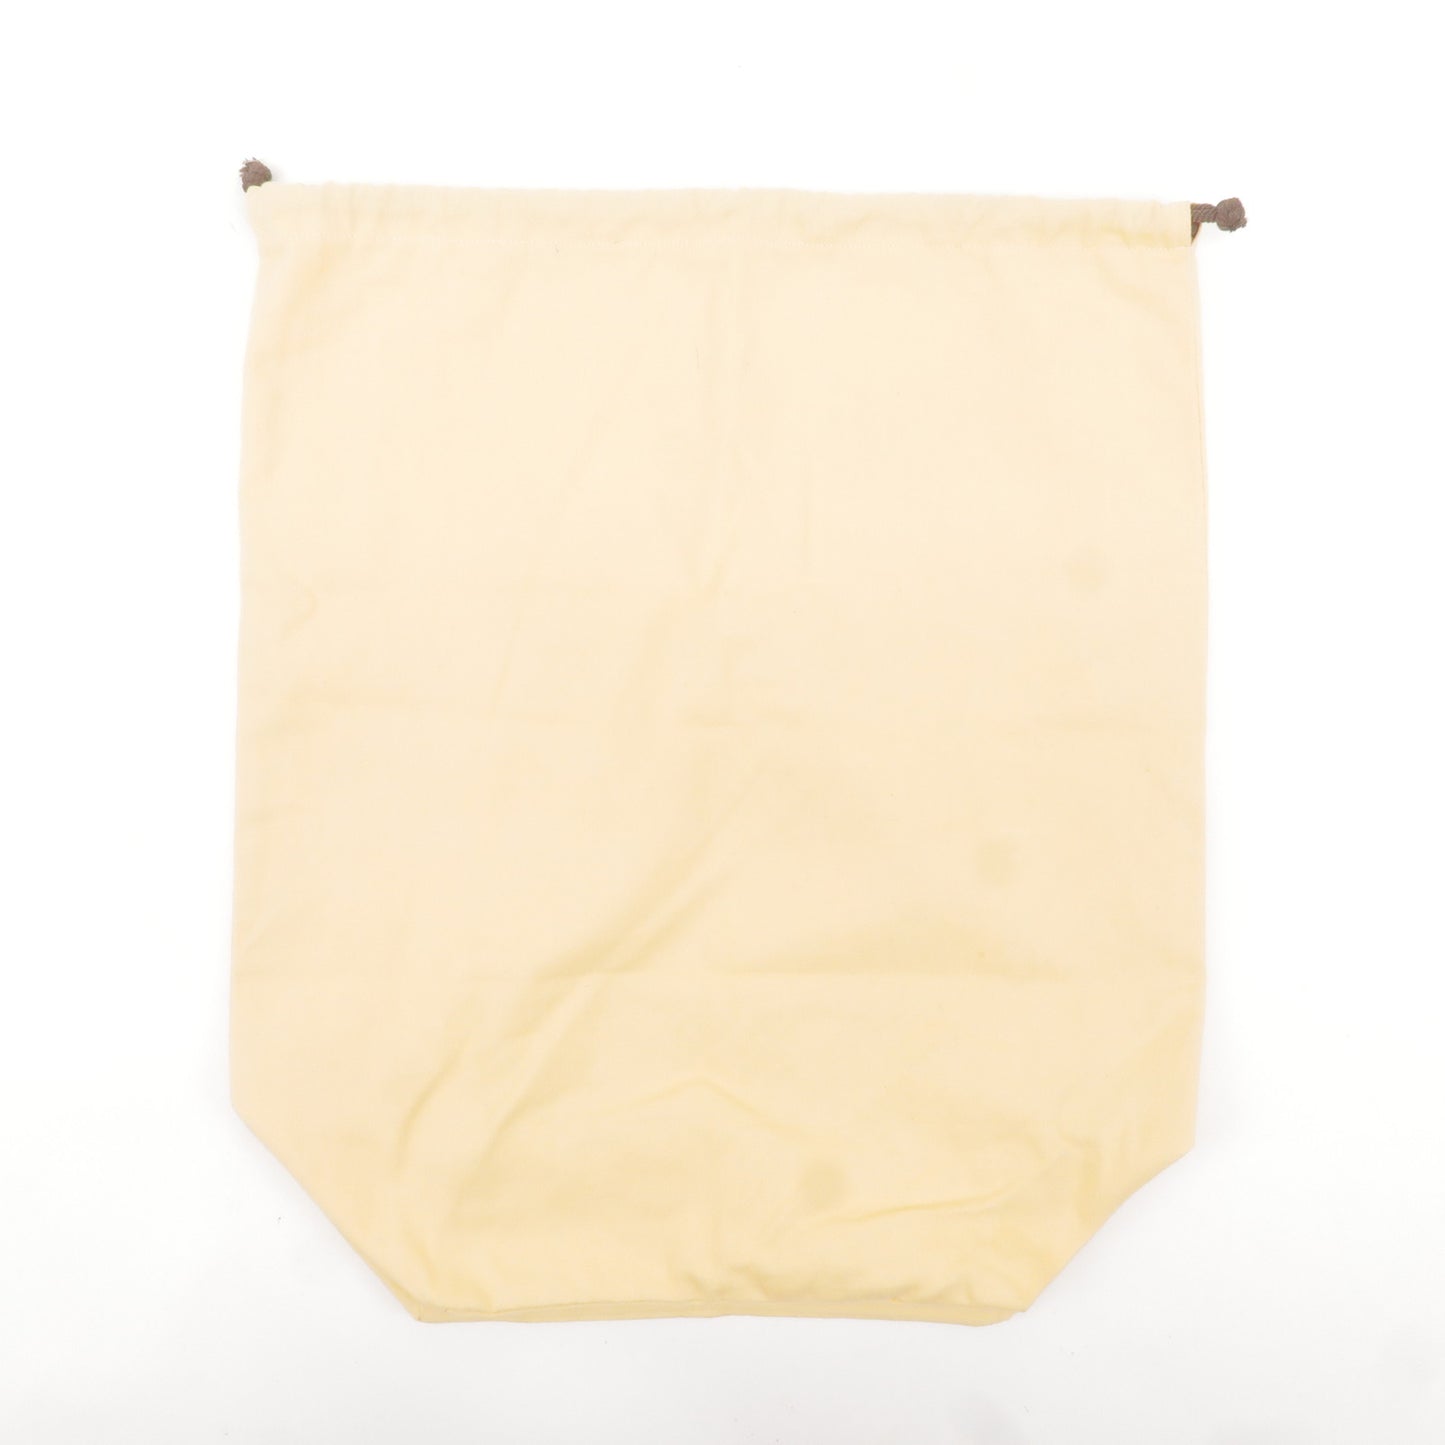 Louis-Vuitton-Set-of-8-Dust-Bag-Storage-Bag-Draw-String-Beige